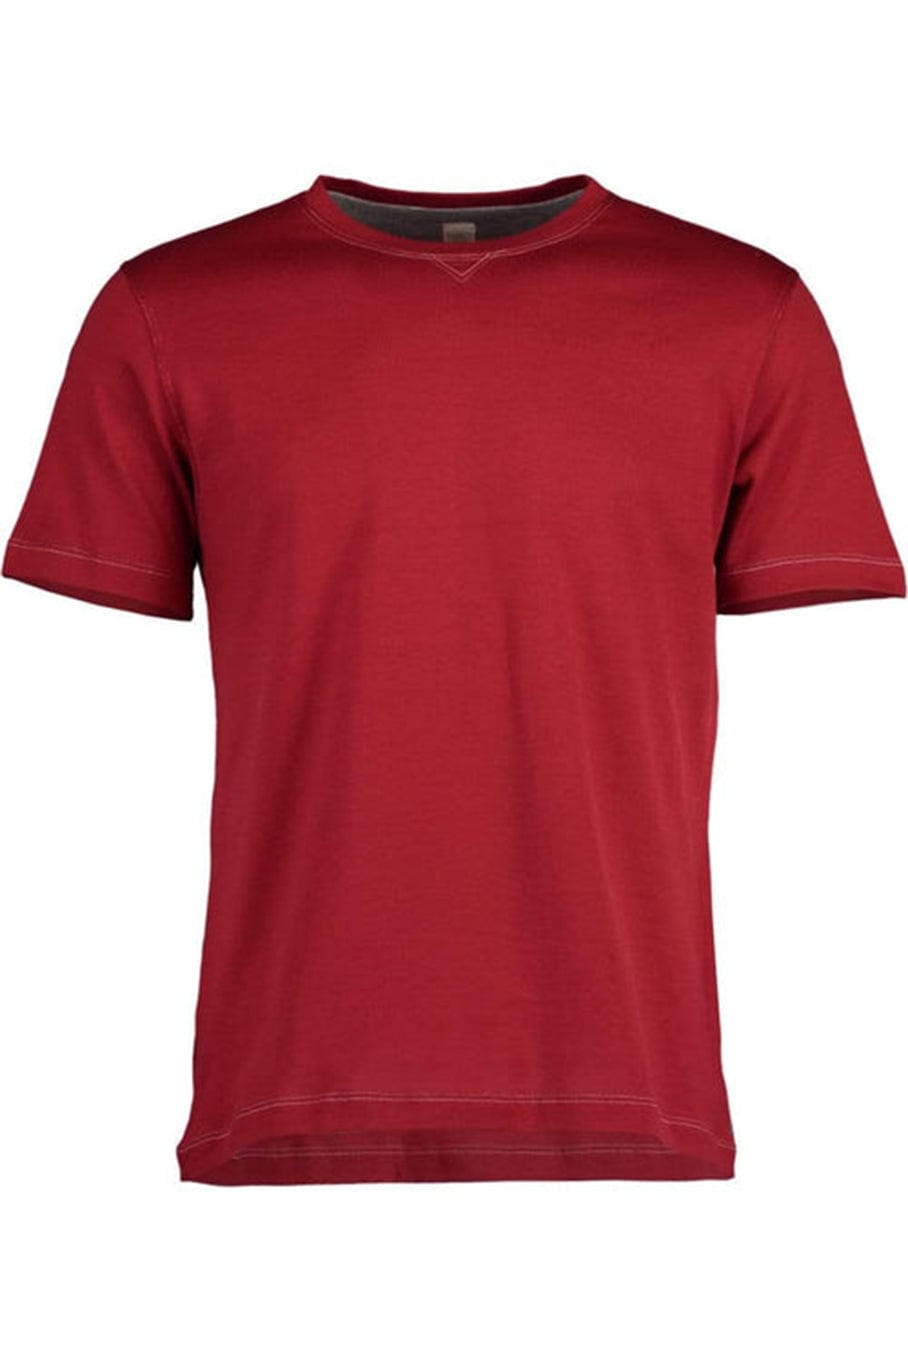 Red Crewneck T-Shirt MENSCLOTHINGTEE ELEVENTY   